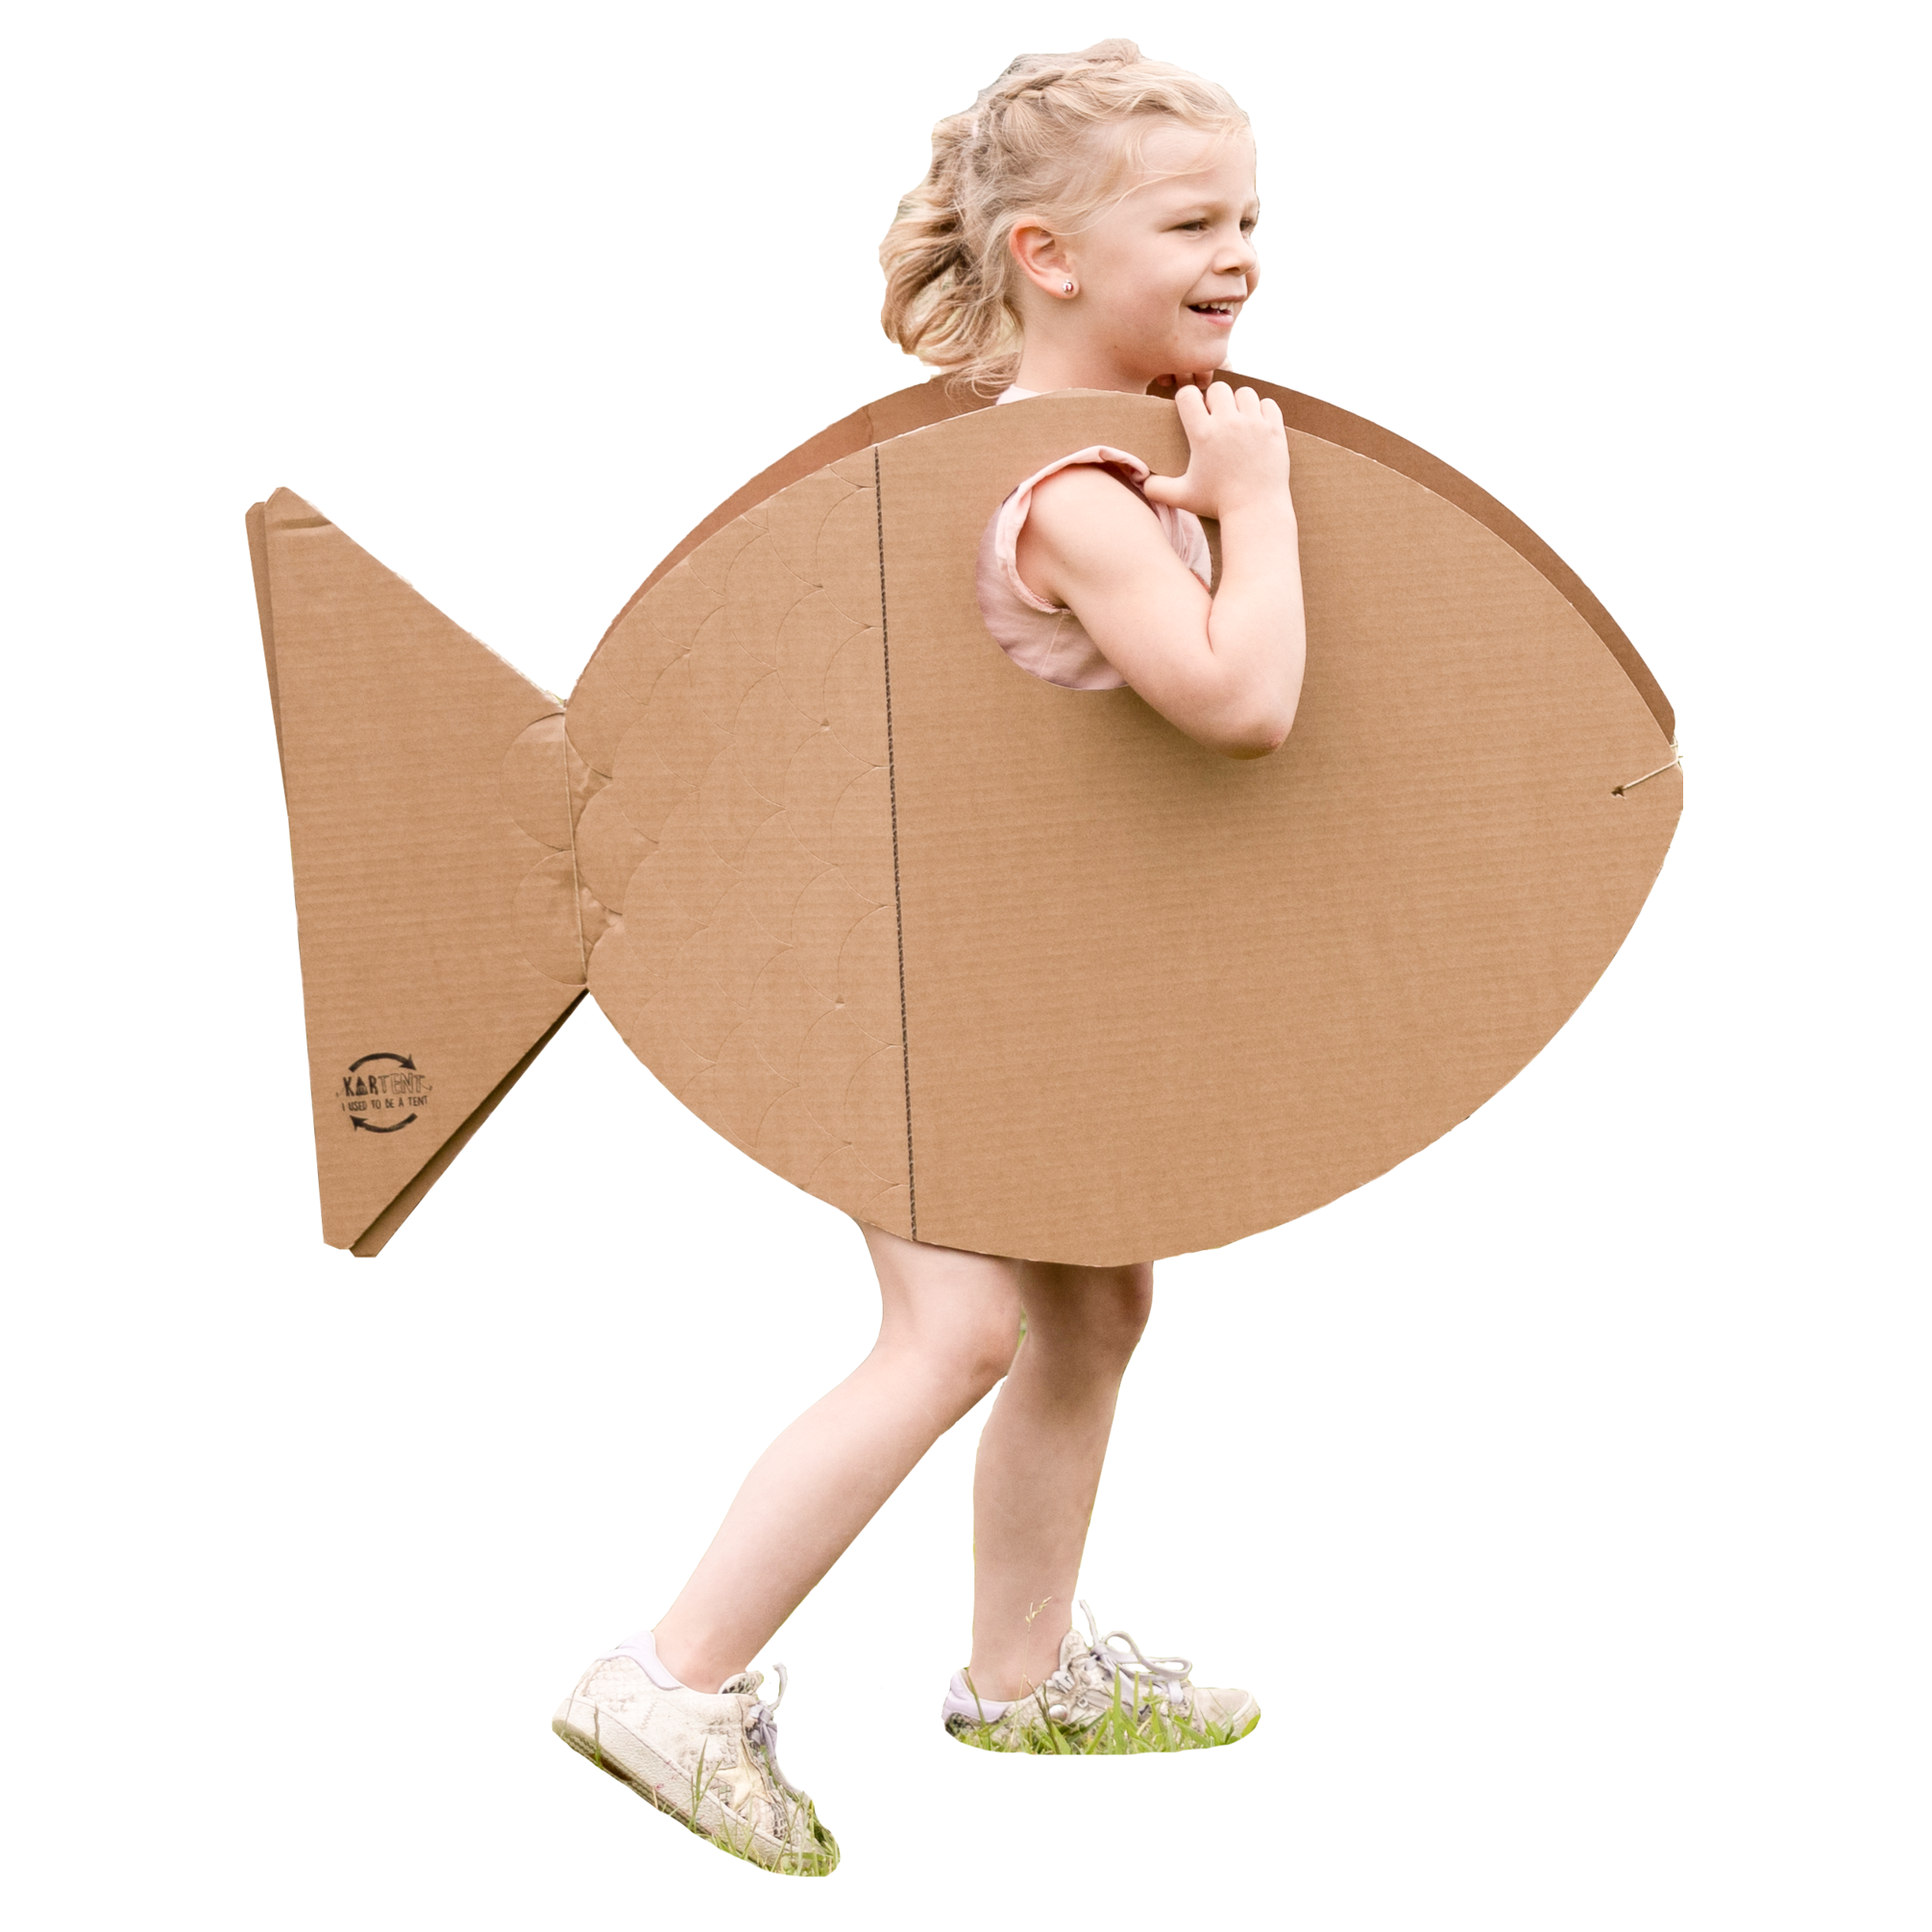 Cardboard fish dressed costume